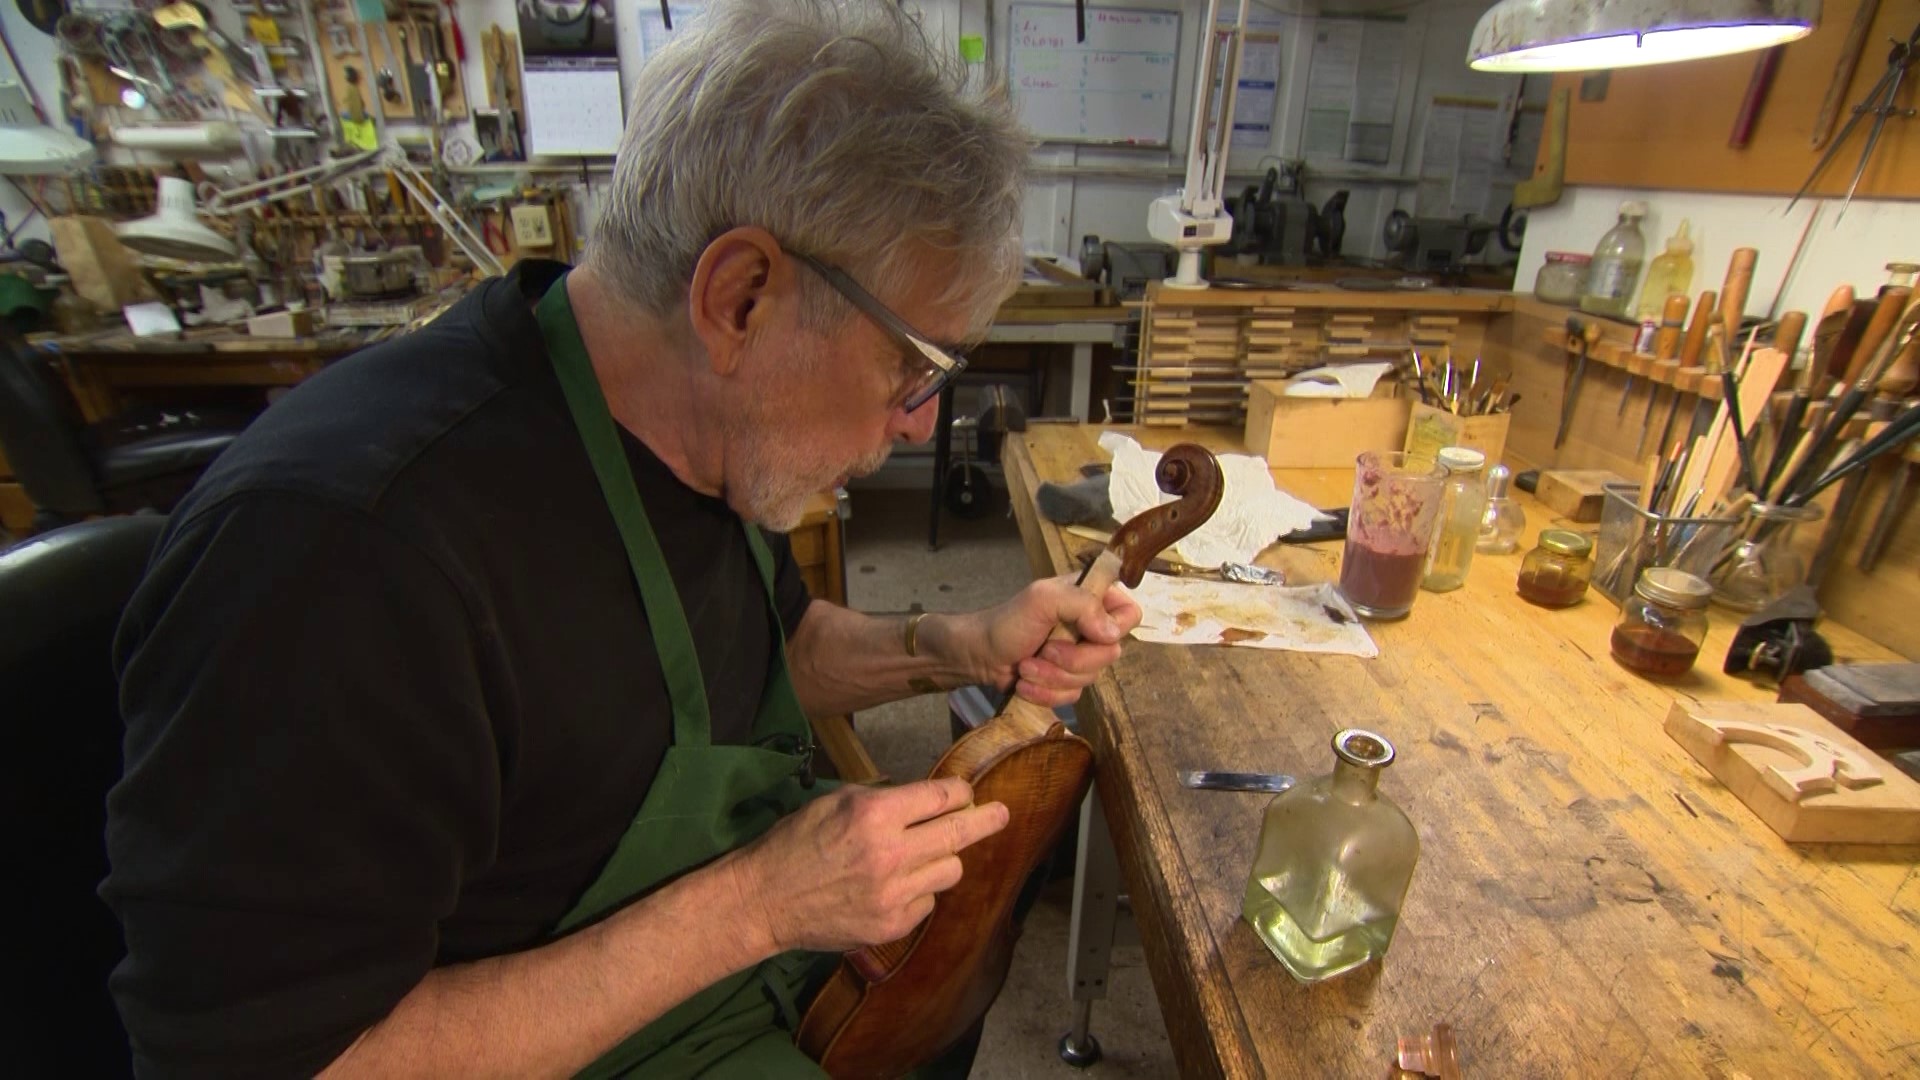 Rafael Carrabba Violins specializes in restoring stringed instruments. #k5evening